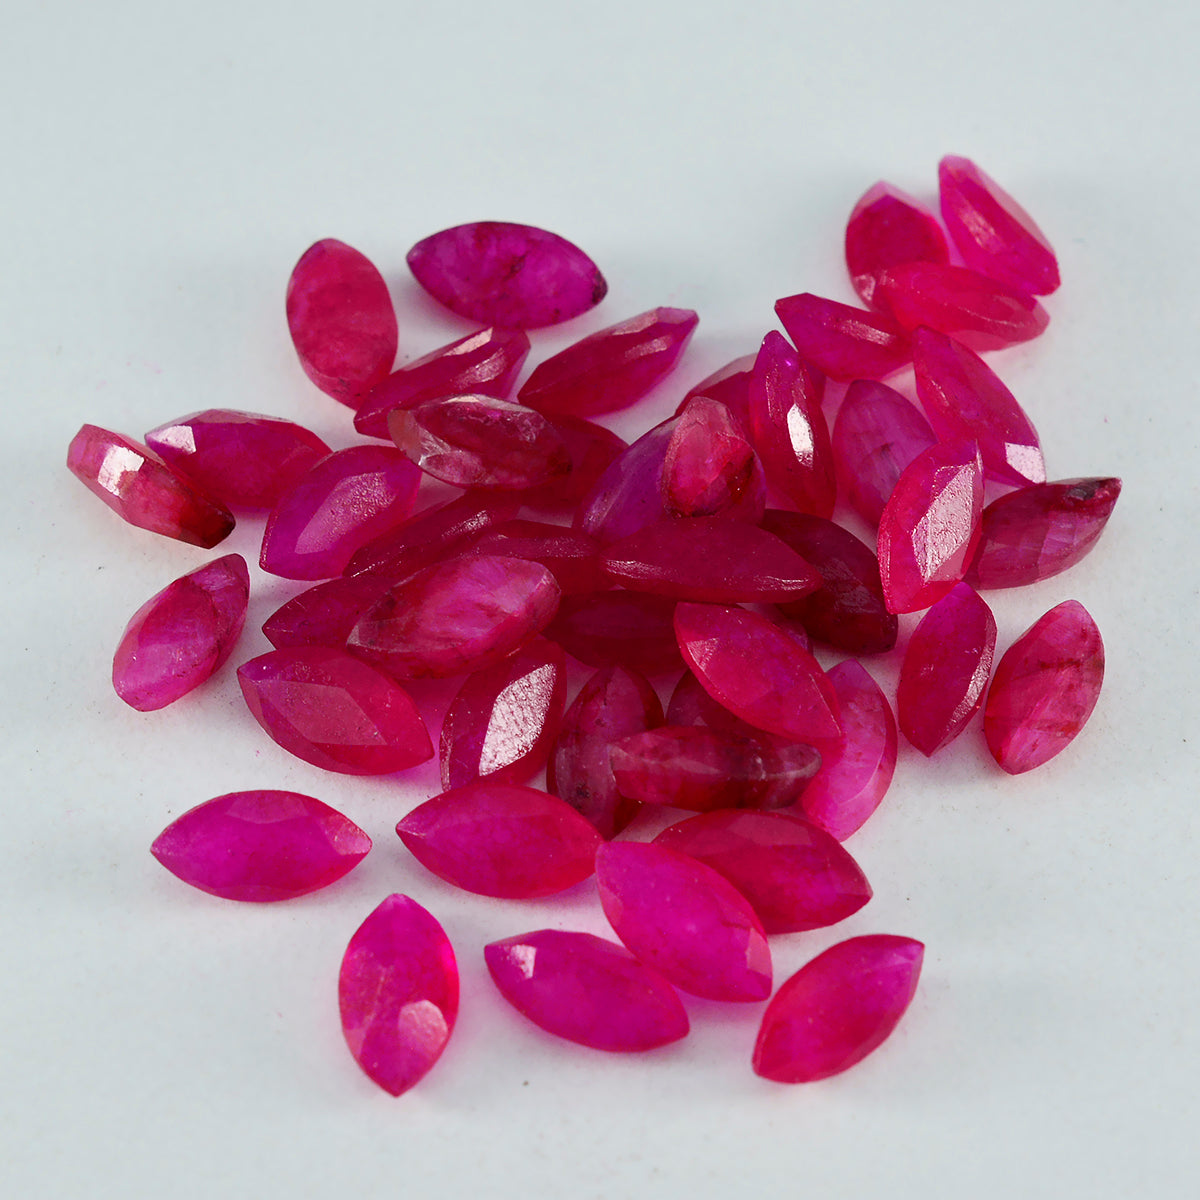 Riyogems 1PC Genuine Red Jasper Faceted 5x10 mm Marquise Shape amazing Quality Loose Gemstone